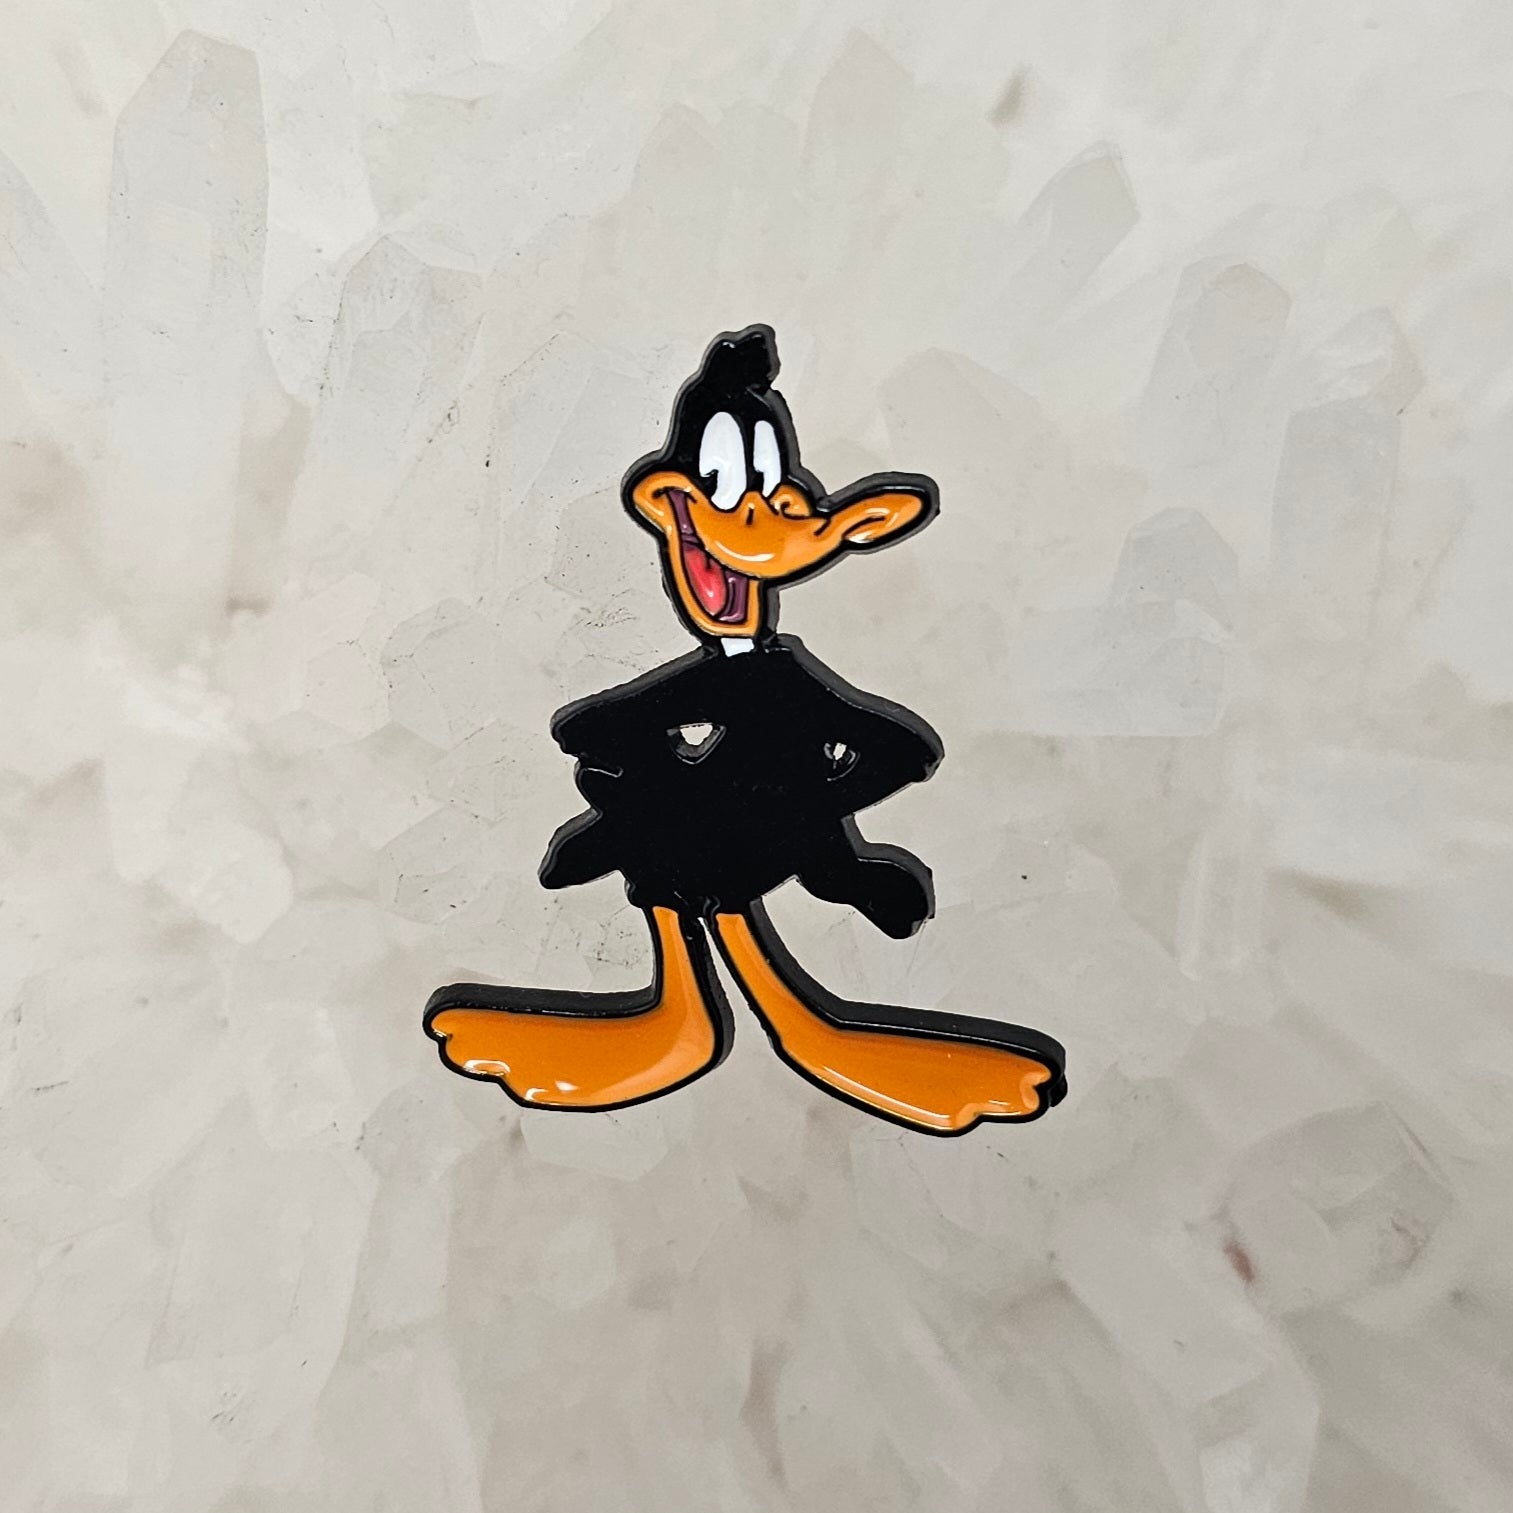 Donald Looney Cartoon Toons Duck Enamel Pins Hat Pins Lapel Pin Brooch Badge Festival Pin